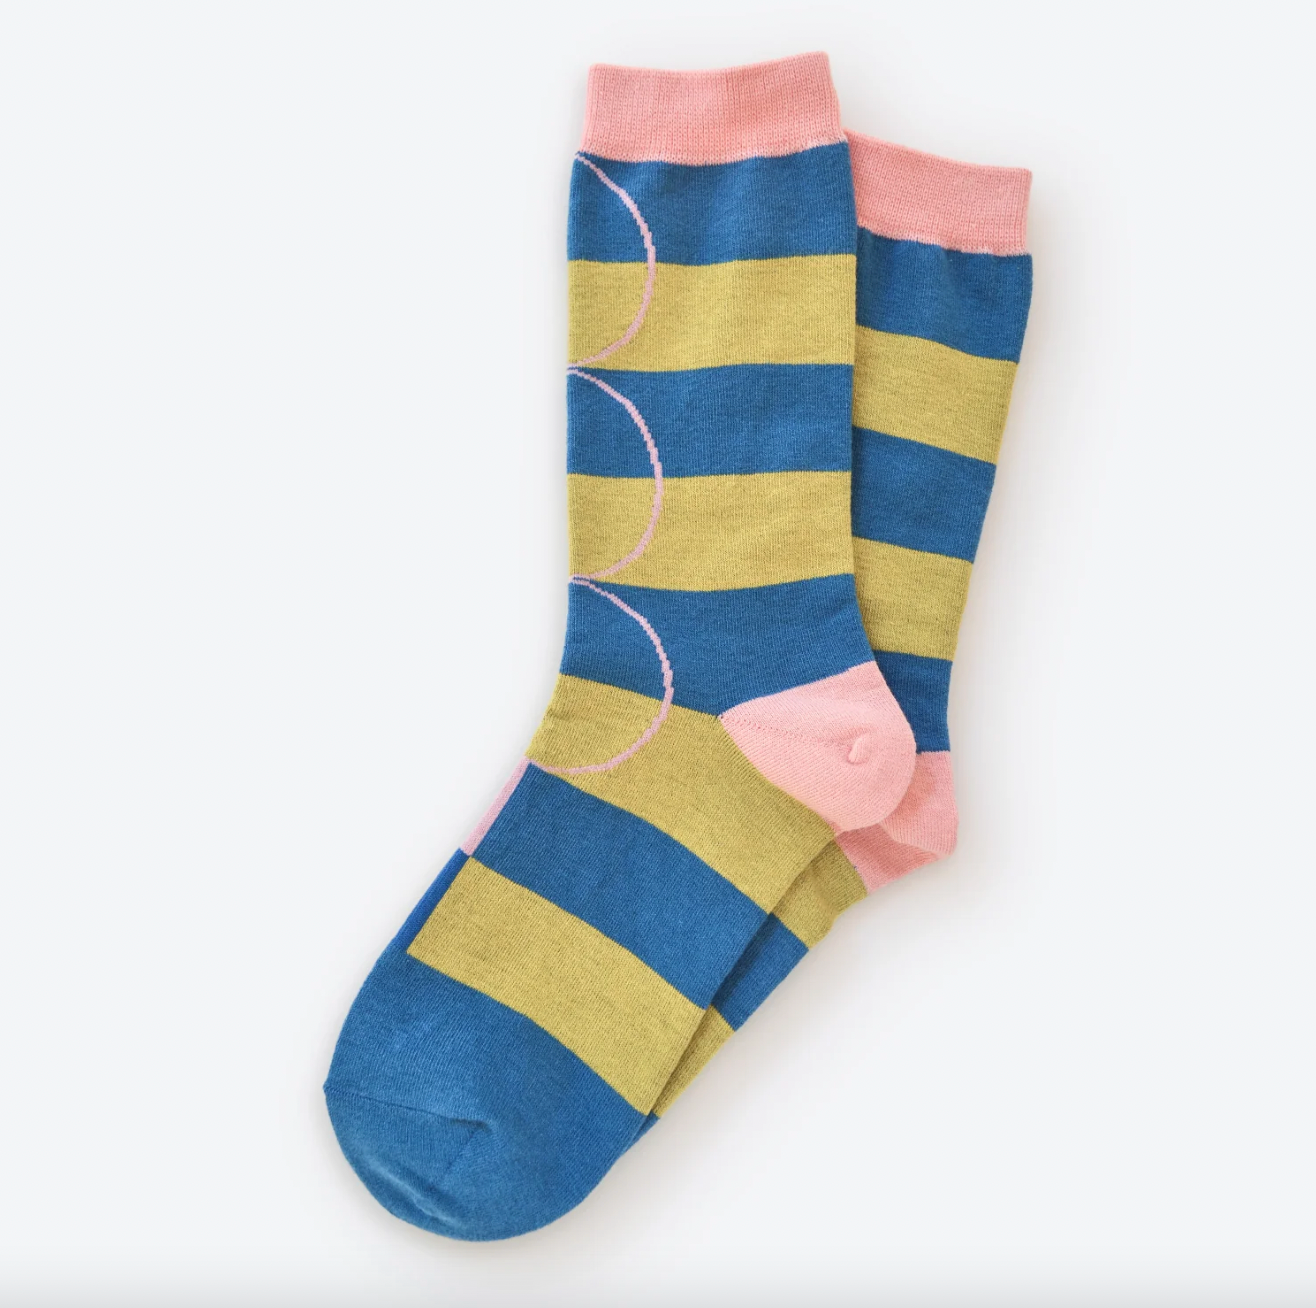 Hooray Sock Co - Dijon & Blue Stripe Socks (Small/Medium)